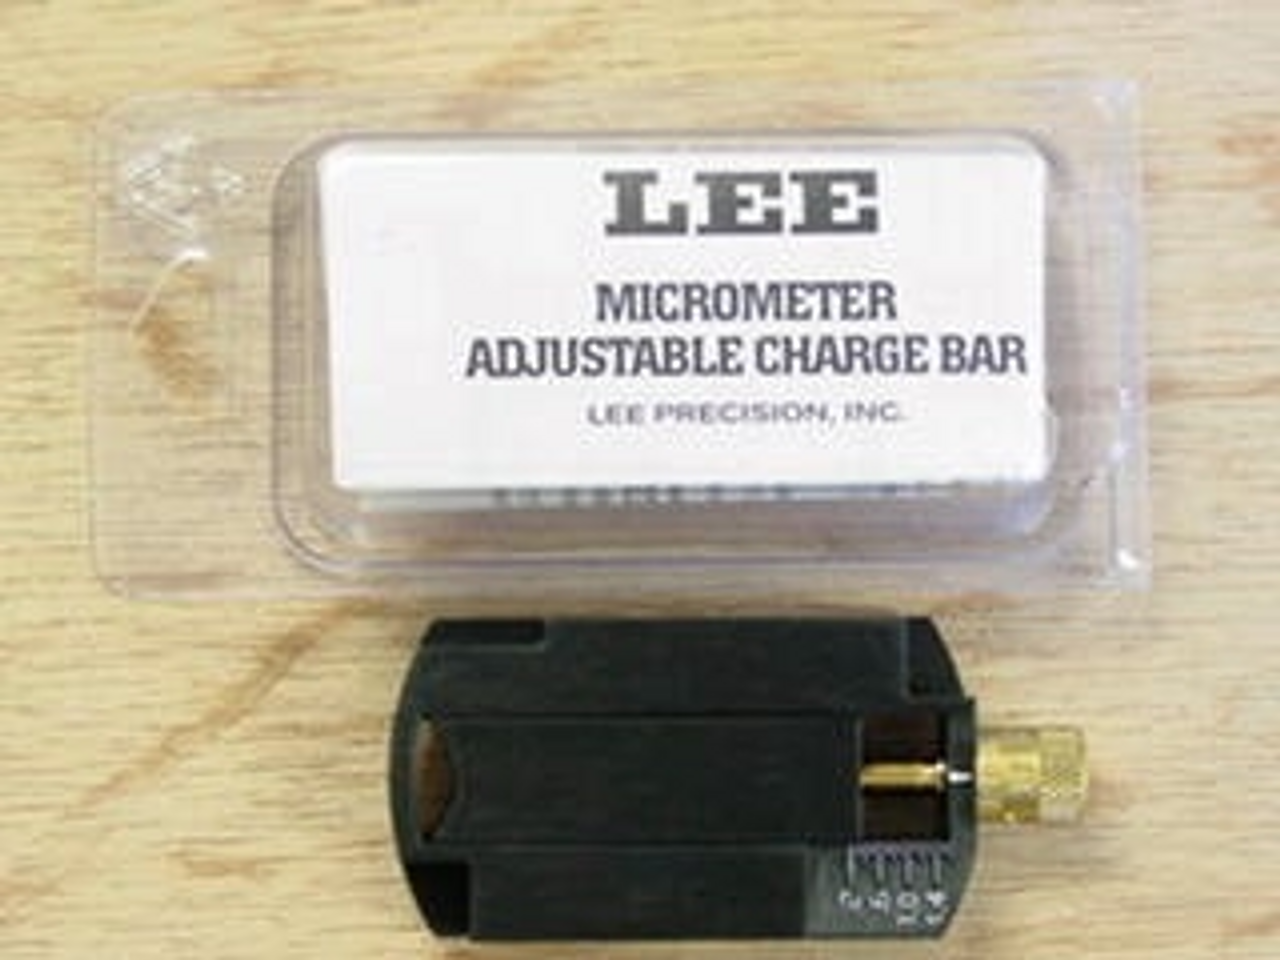 Lee Precision Adjustable Charge Bar